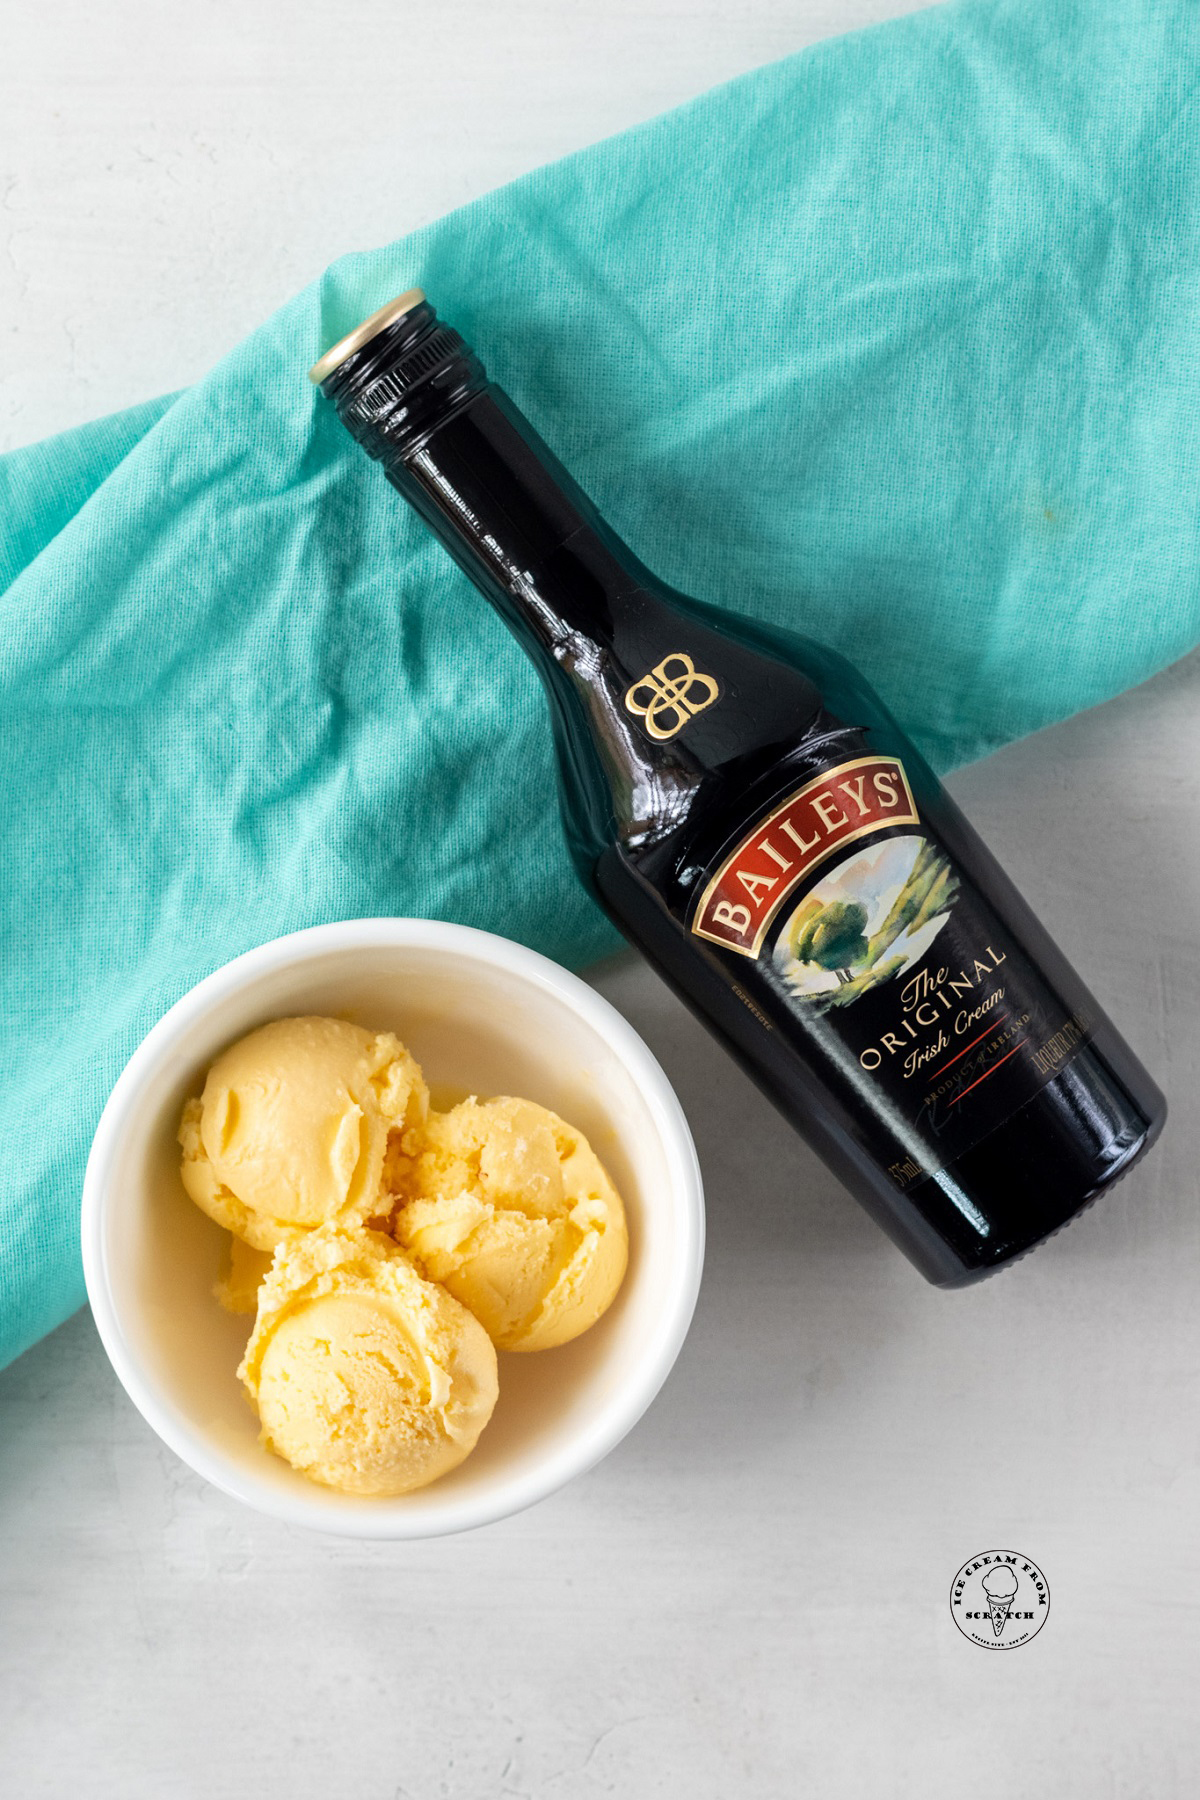 a bottle of baileys irish cream next to a bowl of vanilla ice cream.